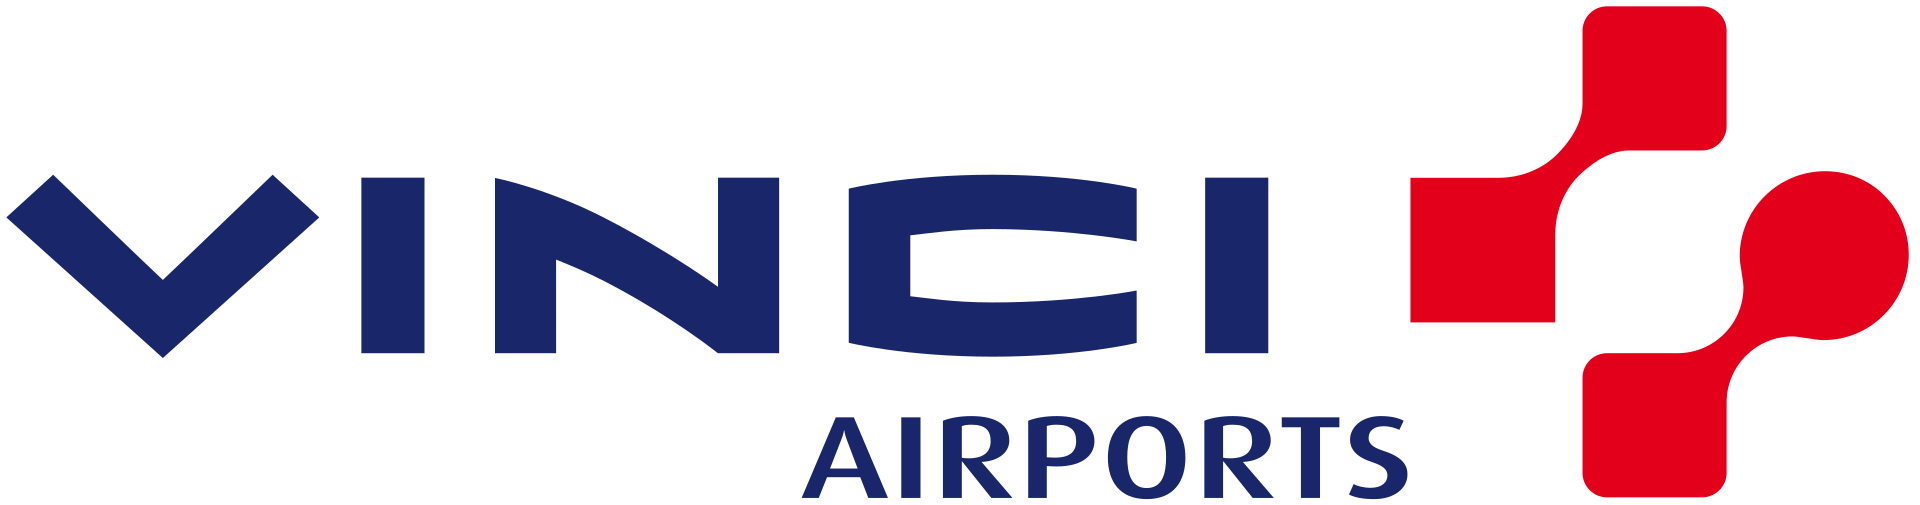 logo-vinci-airports